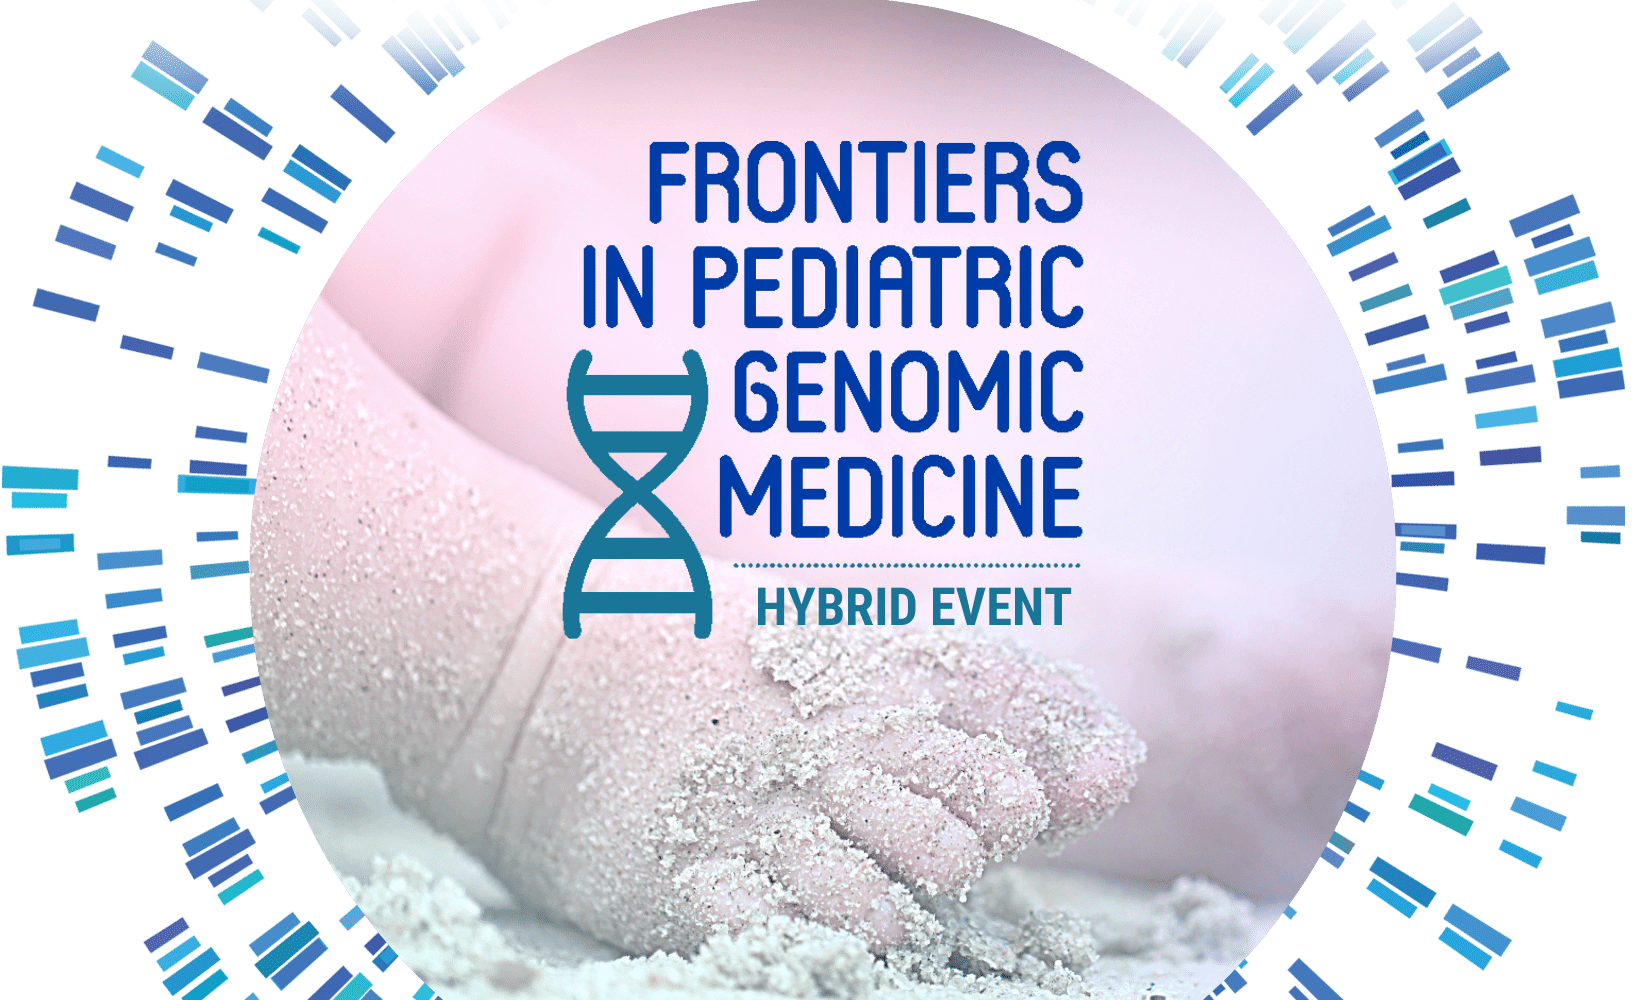 Frontiers in Pediatric Genomic Medicine Conference